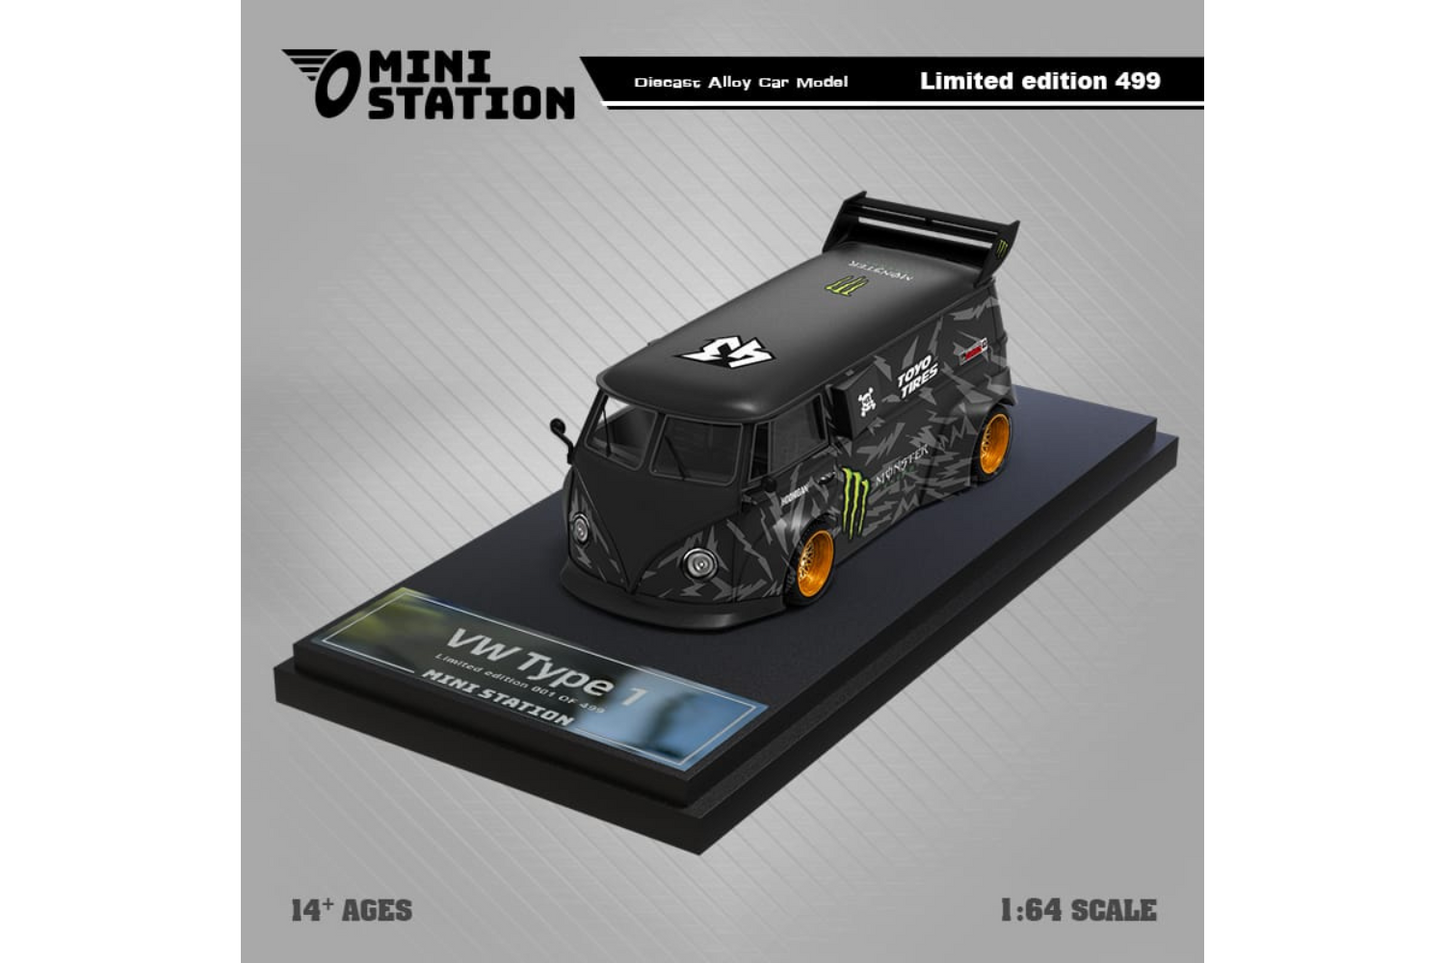 Mini Station 1/64 RWB VW T1 Van and RWB VW Beetle Targa Trailer Set in Monster Livery